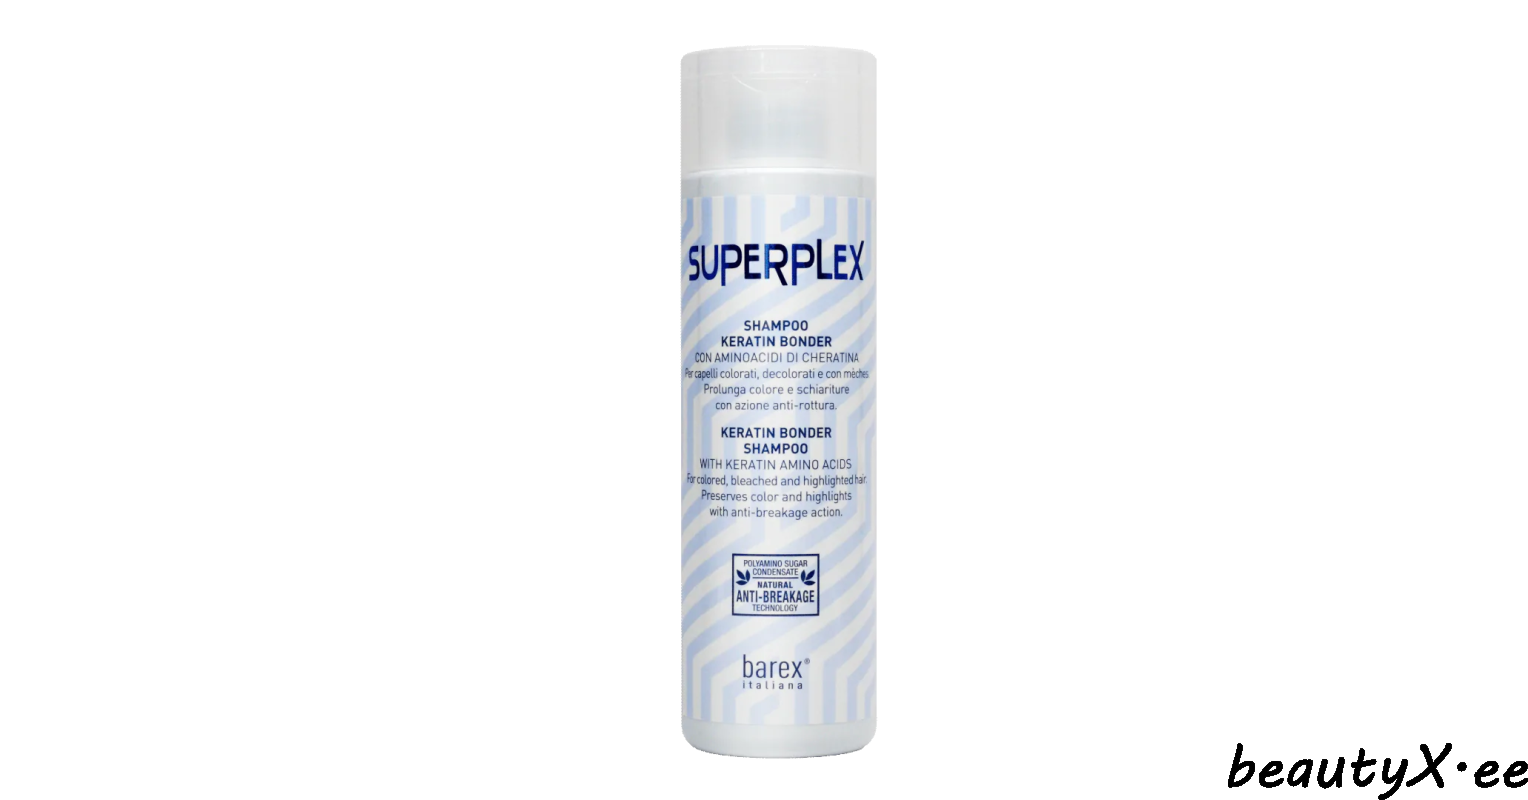 Barex Superplex Keratin Bonder Shampoo with keratin amino acids 250ml